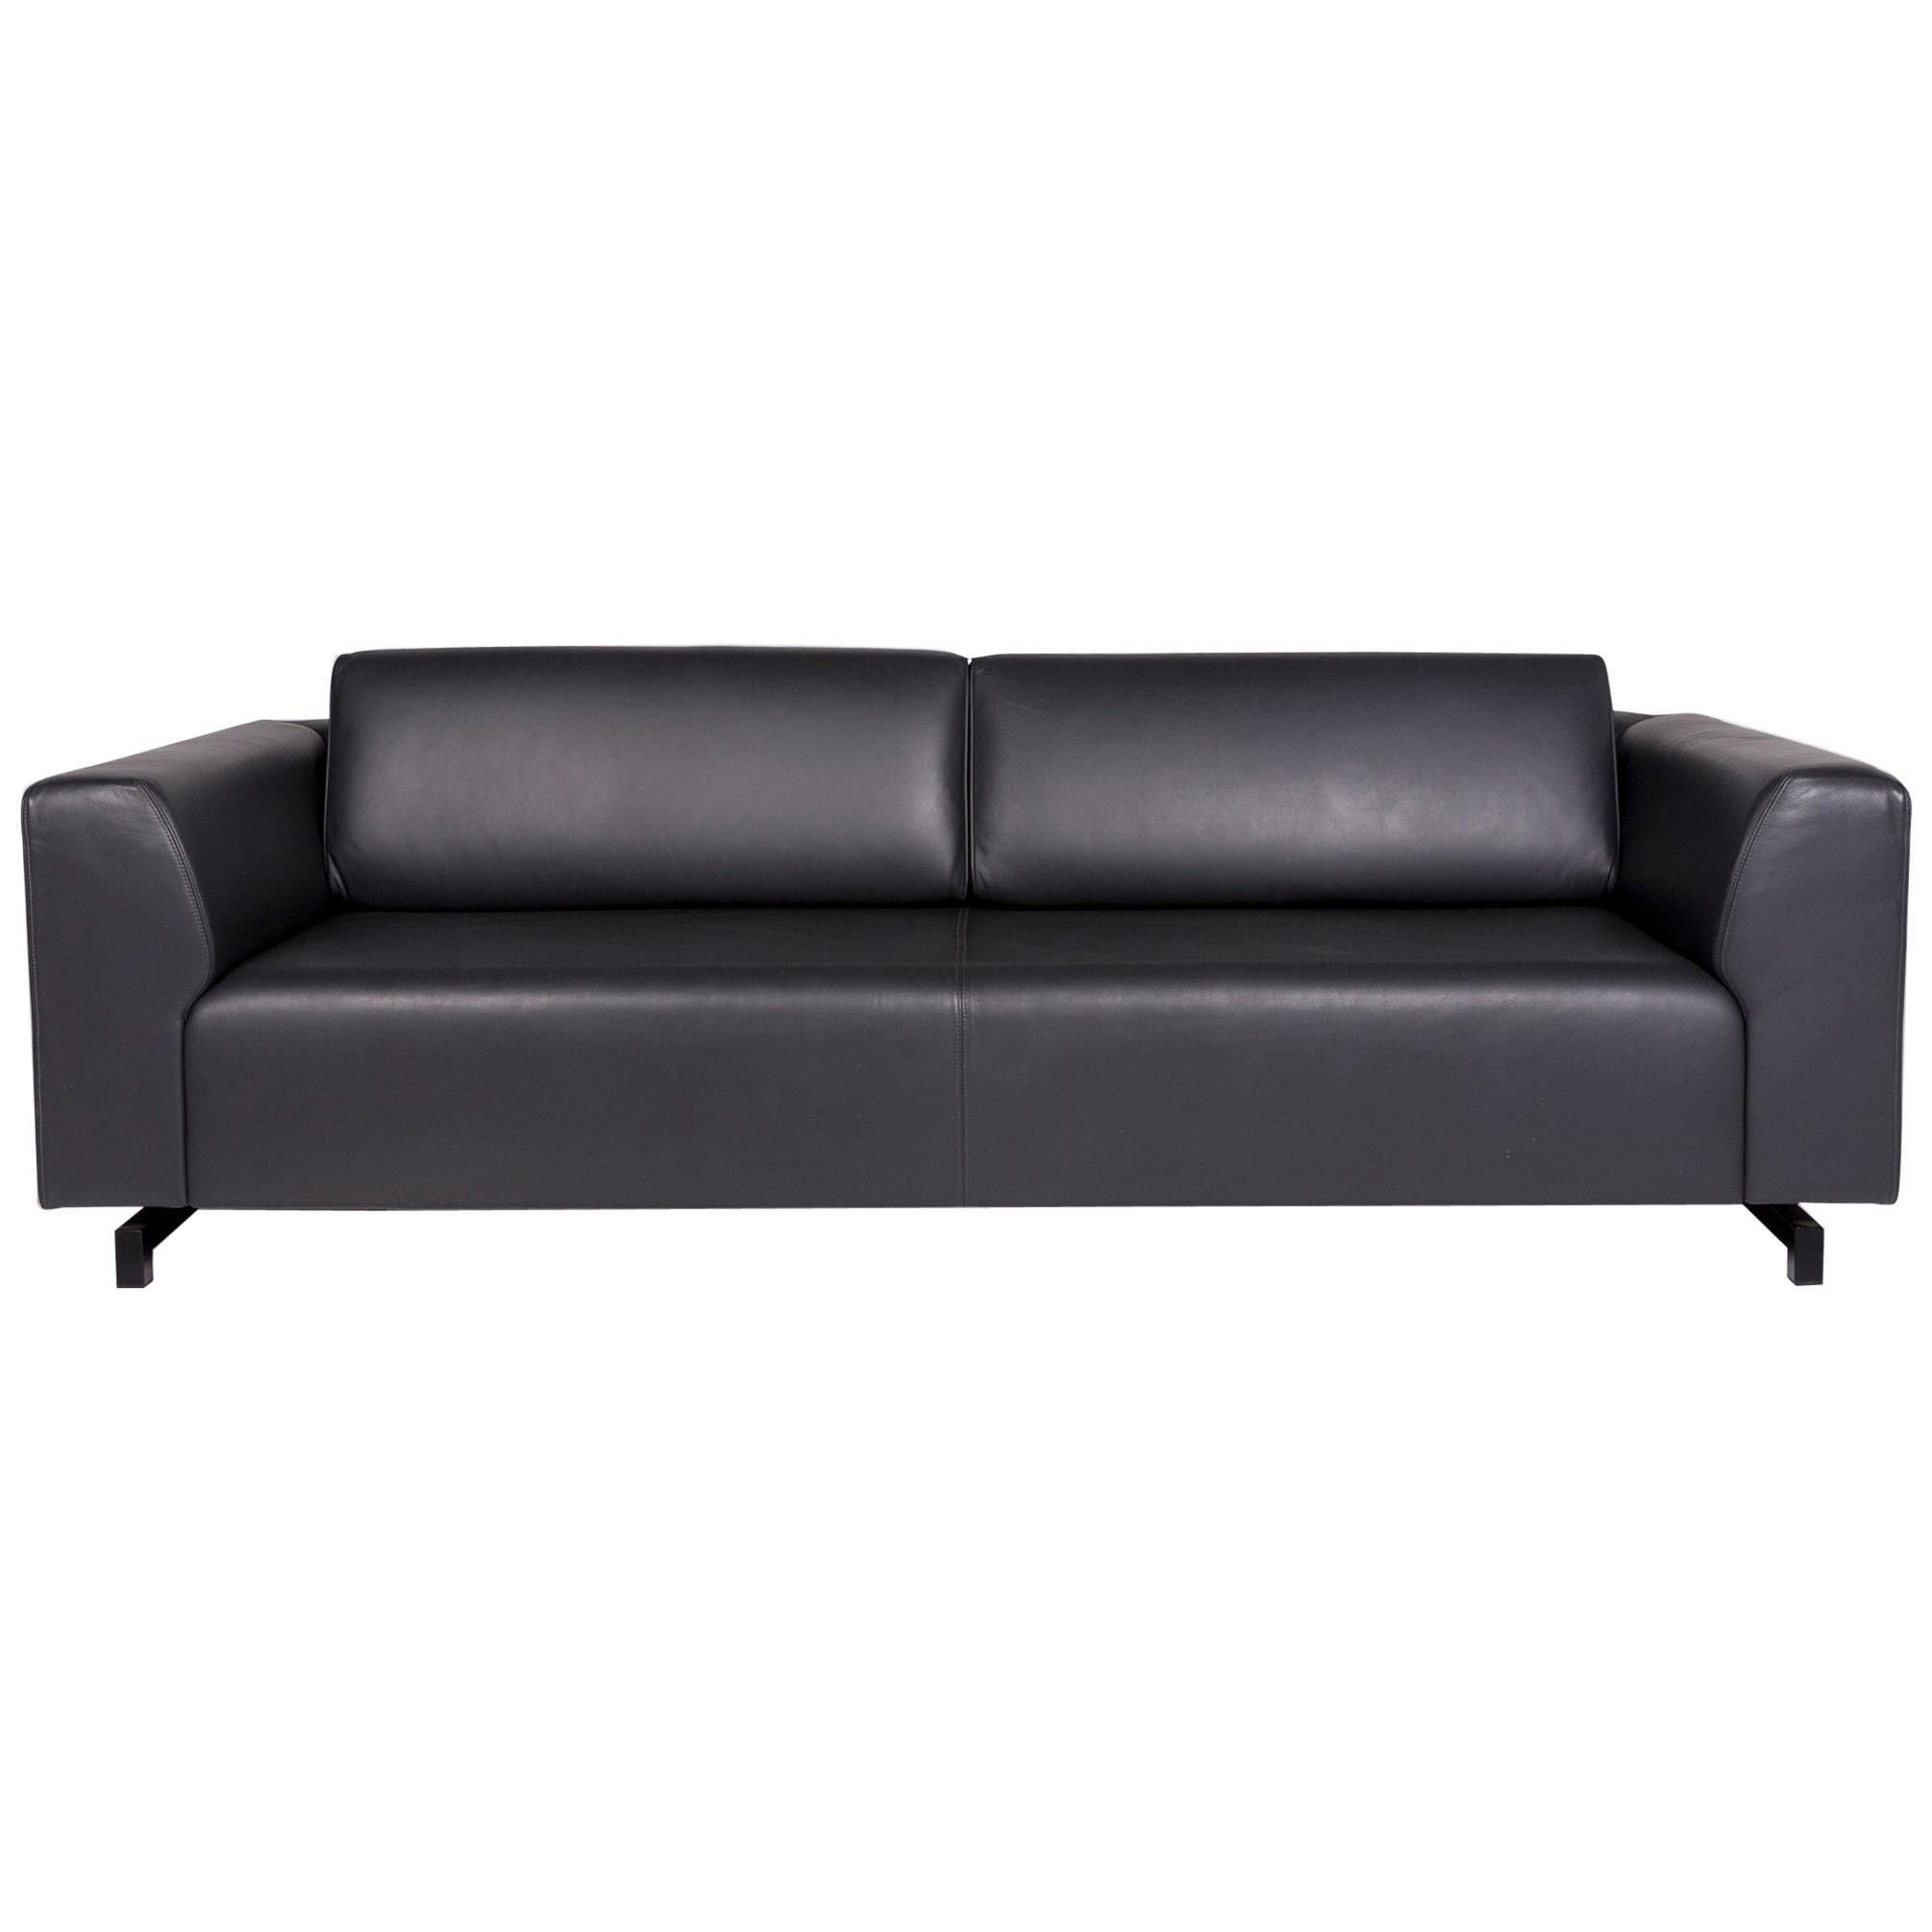 Wittmann Square Leather Sofa Gray Dark Gray Three-Seat Couch